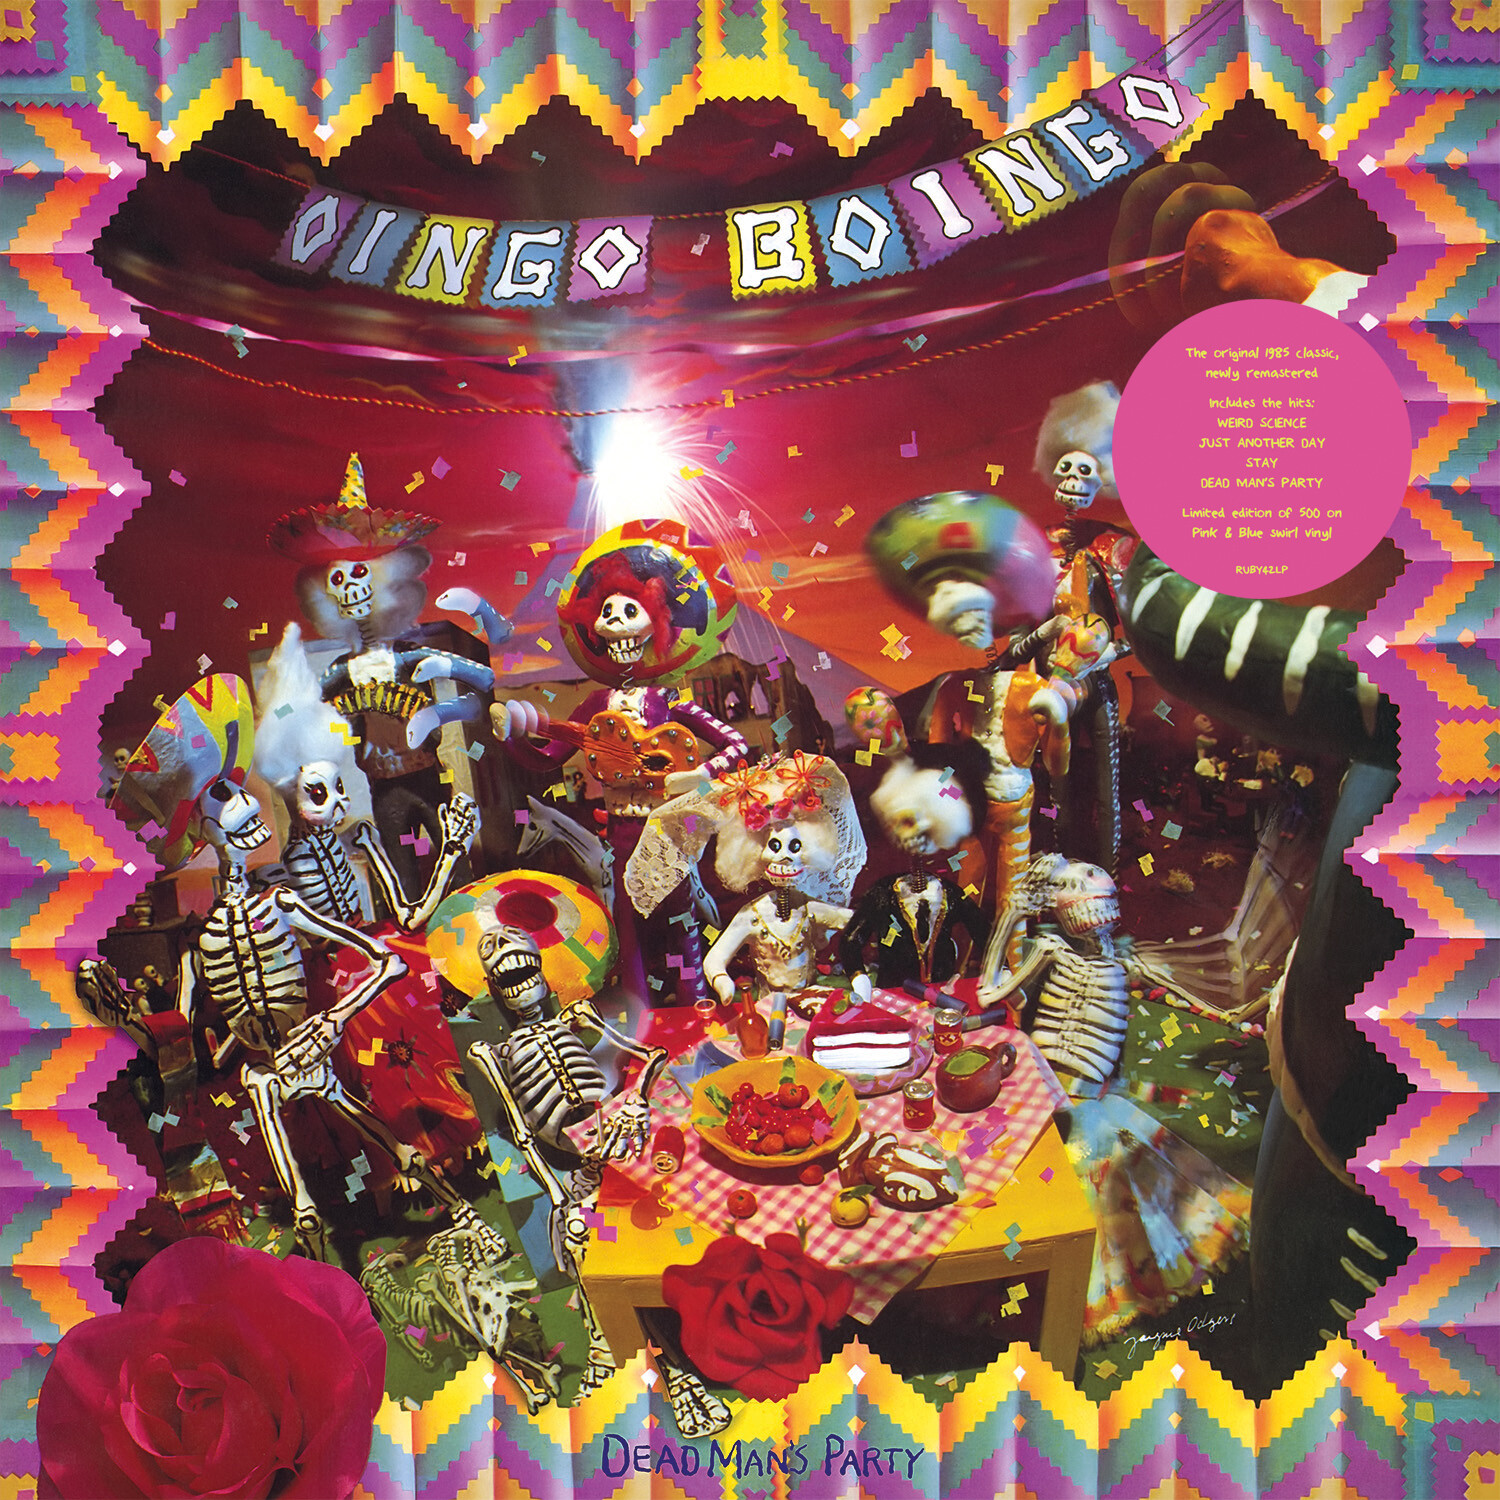 PRE-ORDER Oingo Boingo / Dead Man's Party LP: Pink swirl vinyl